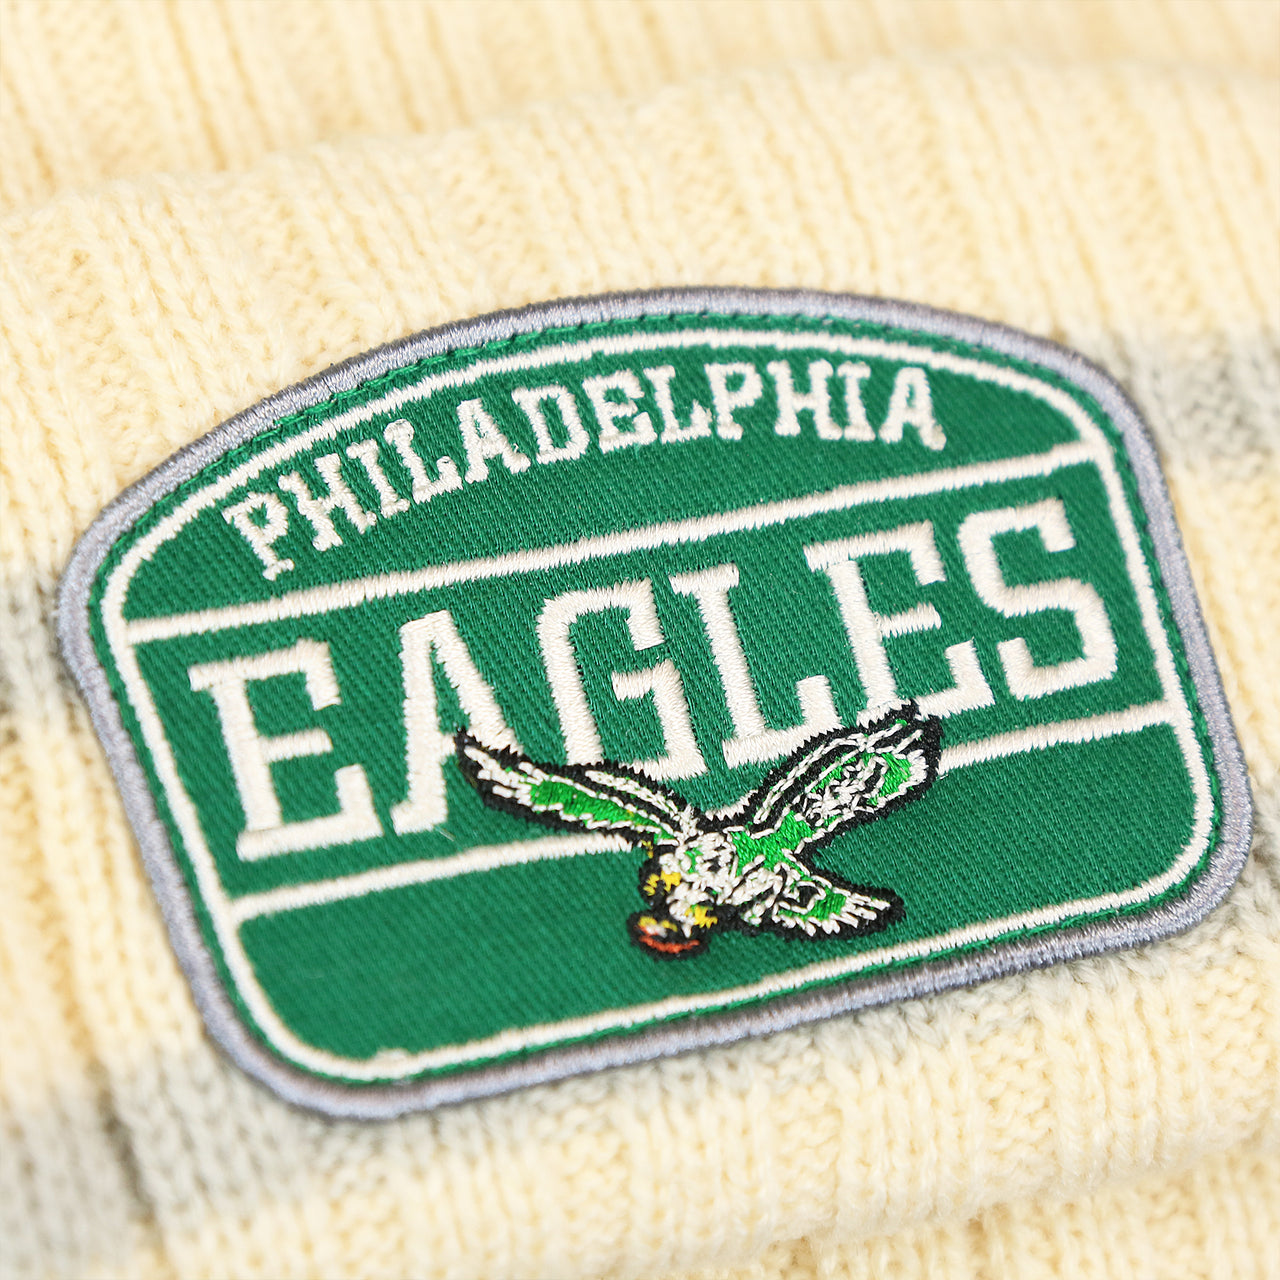 The Eagles Logo on the Throwback Philadelphia Eagles Legacy 1987 Eagles Patch Pom Pom Beanie | Natural Beanie